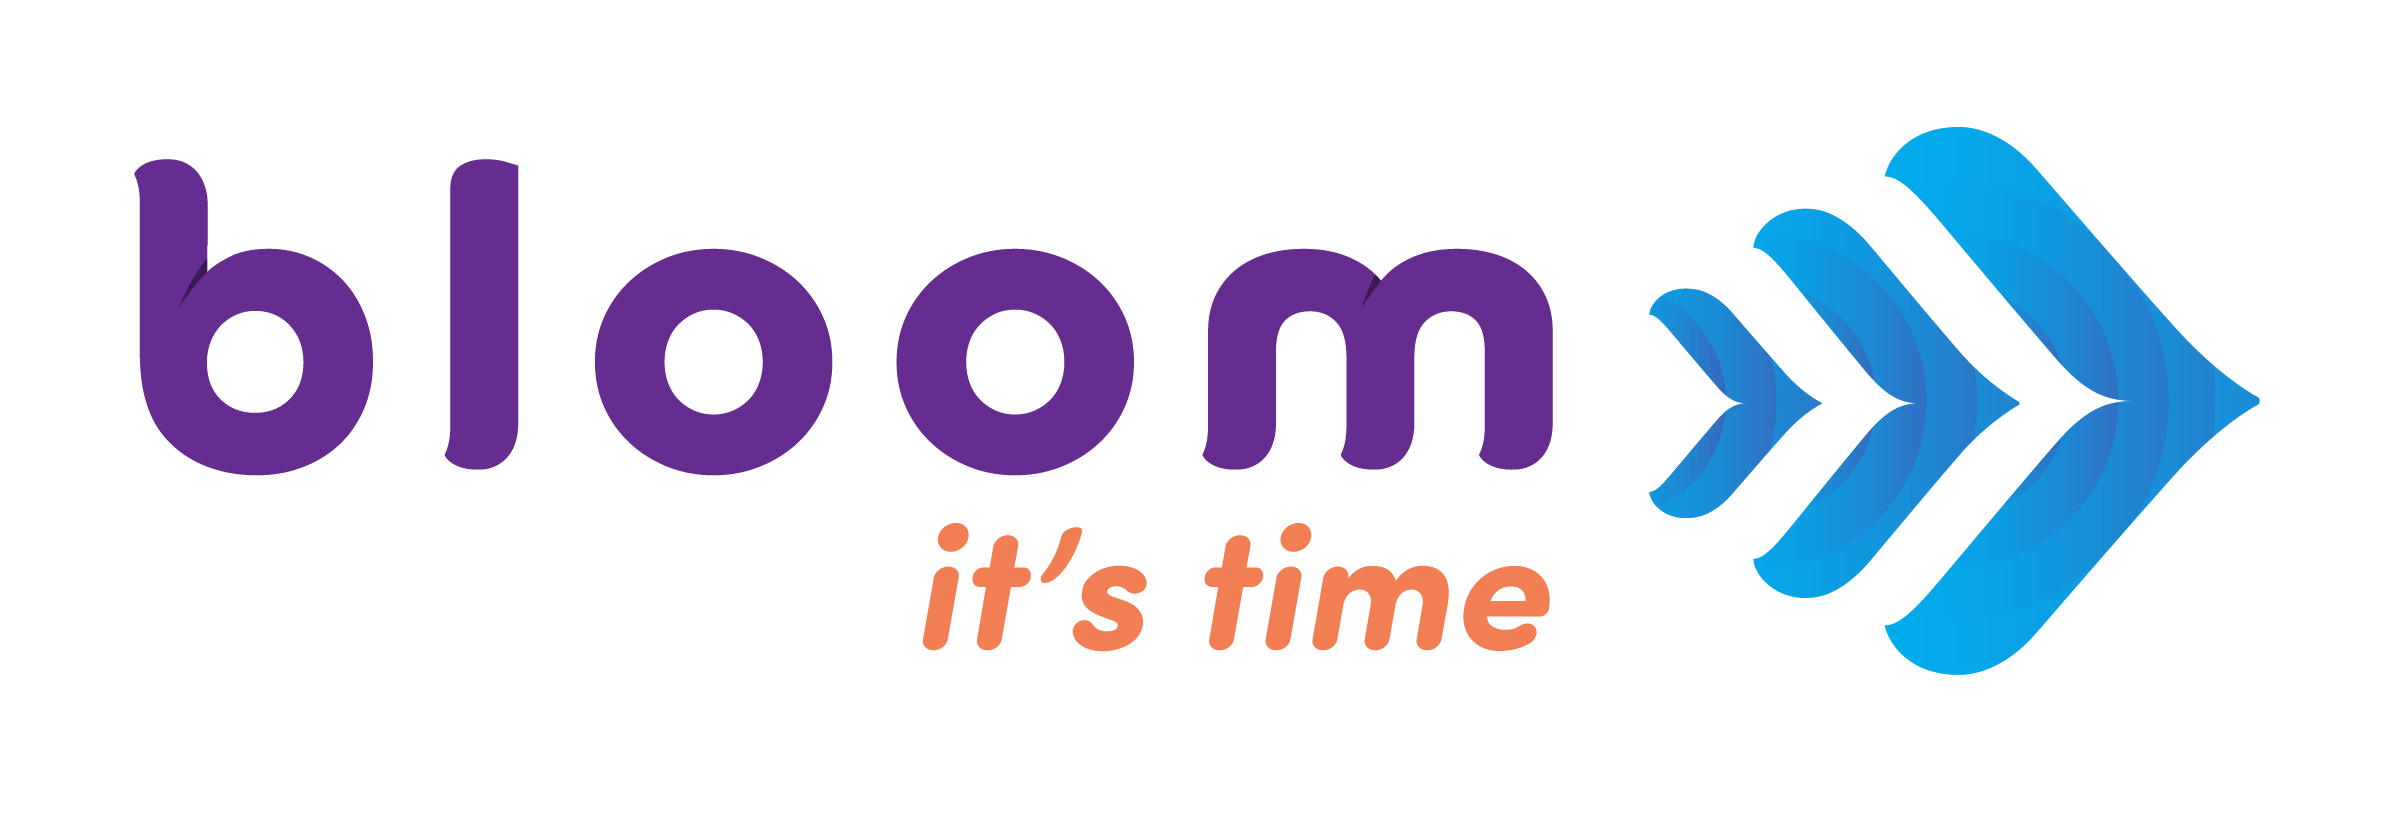 Bloom Network logo